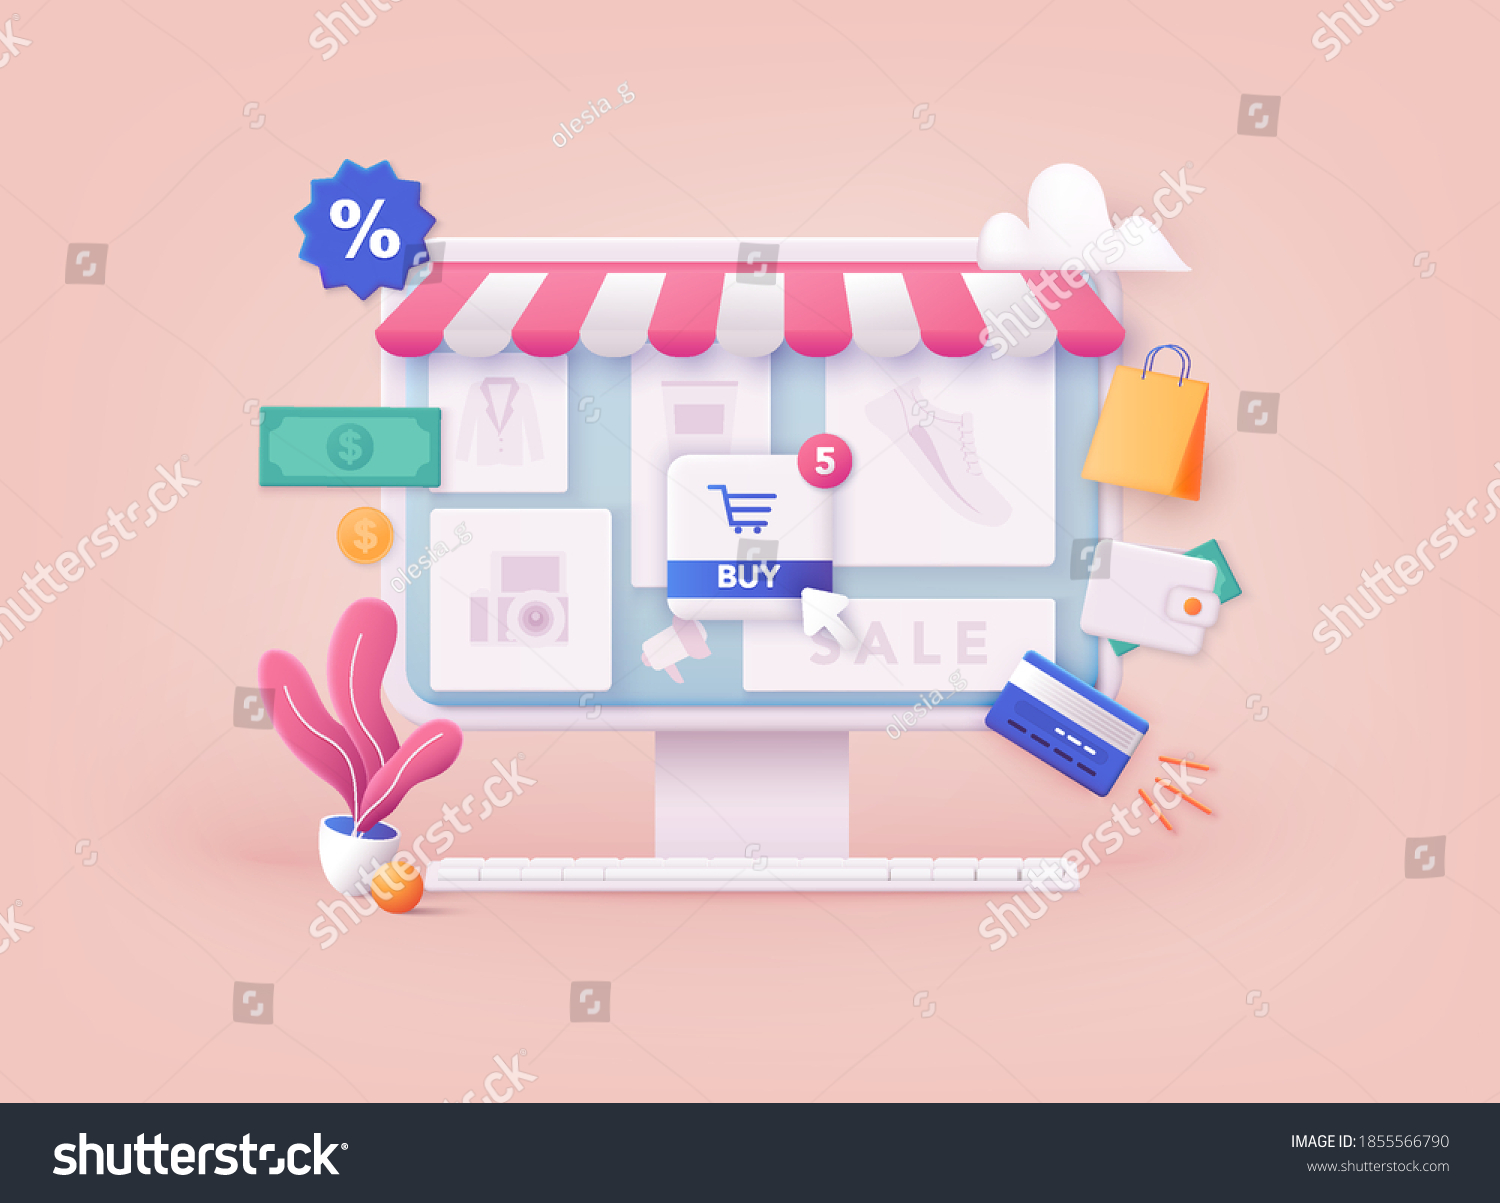 3D Web Vector Illustrations. Online shopping.Design graphic elements, signs, symbols. Mobile marketing and digital marketing. #1855566790